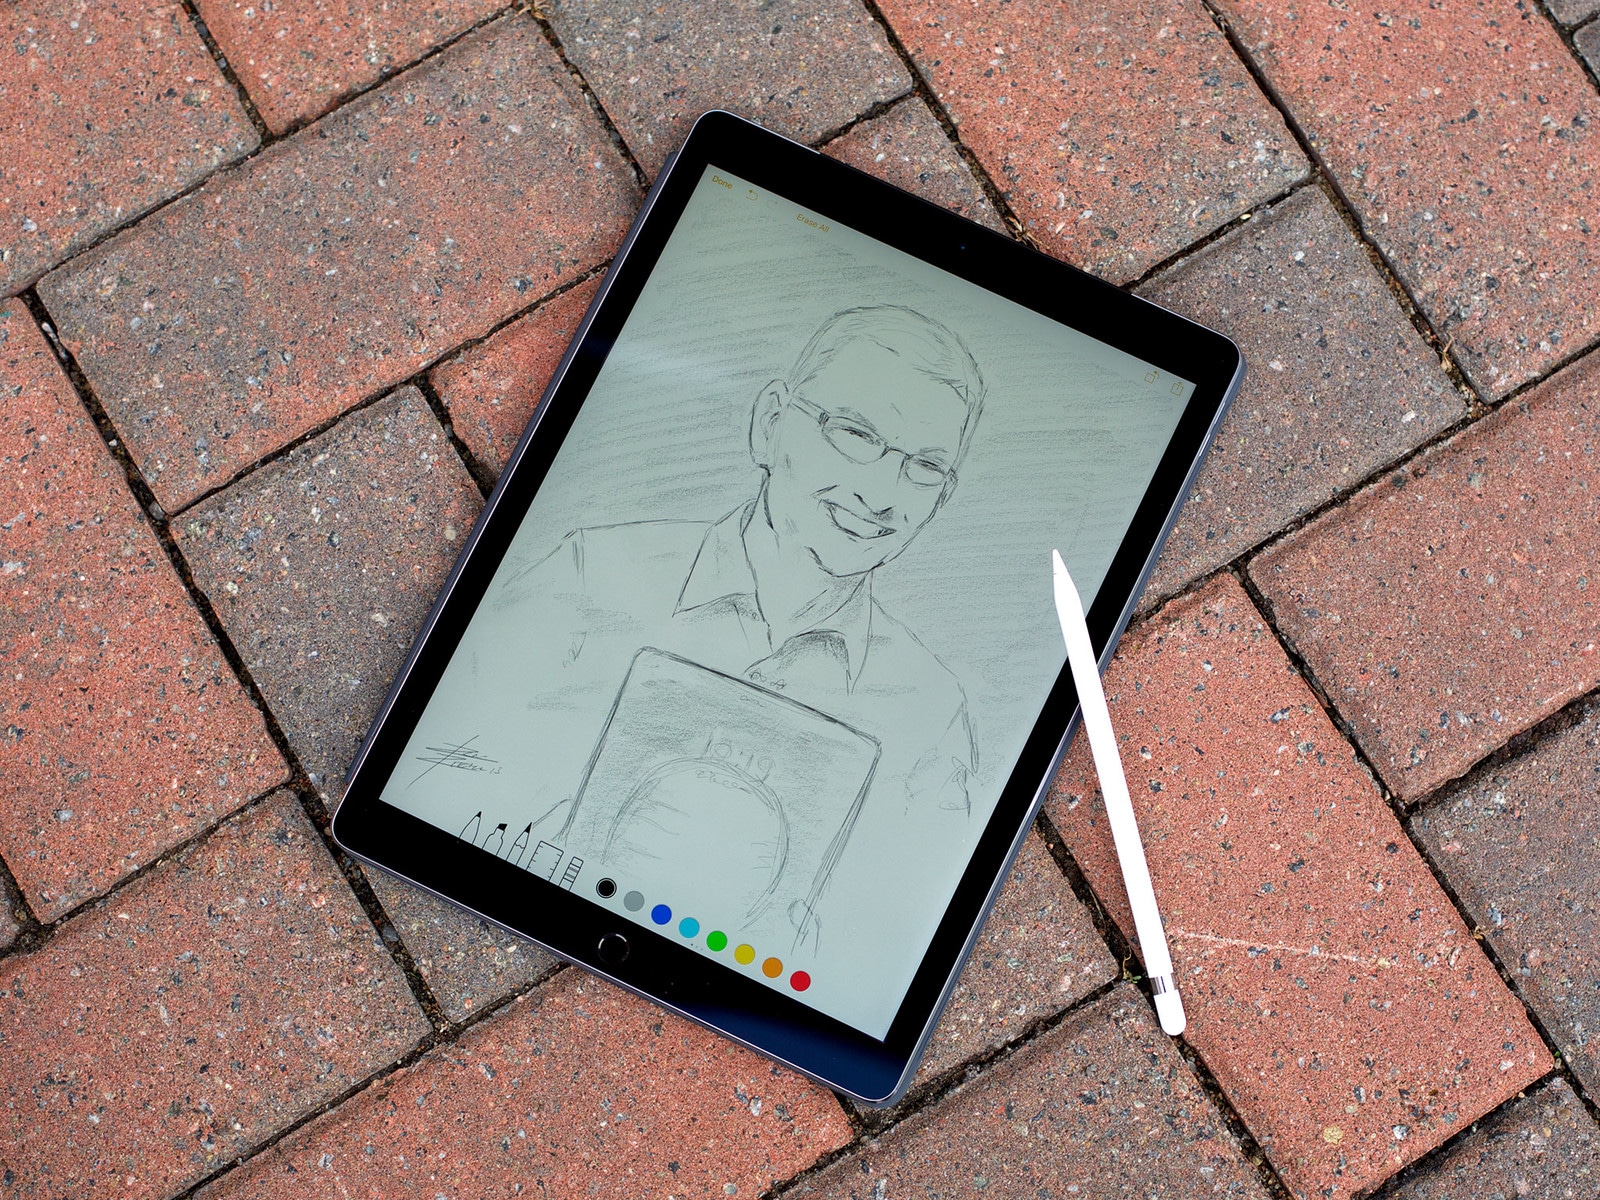 sketchpad drawing pad online